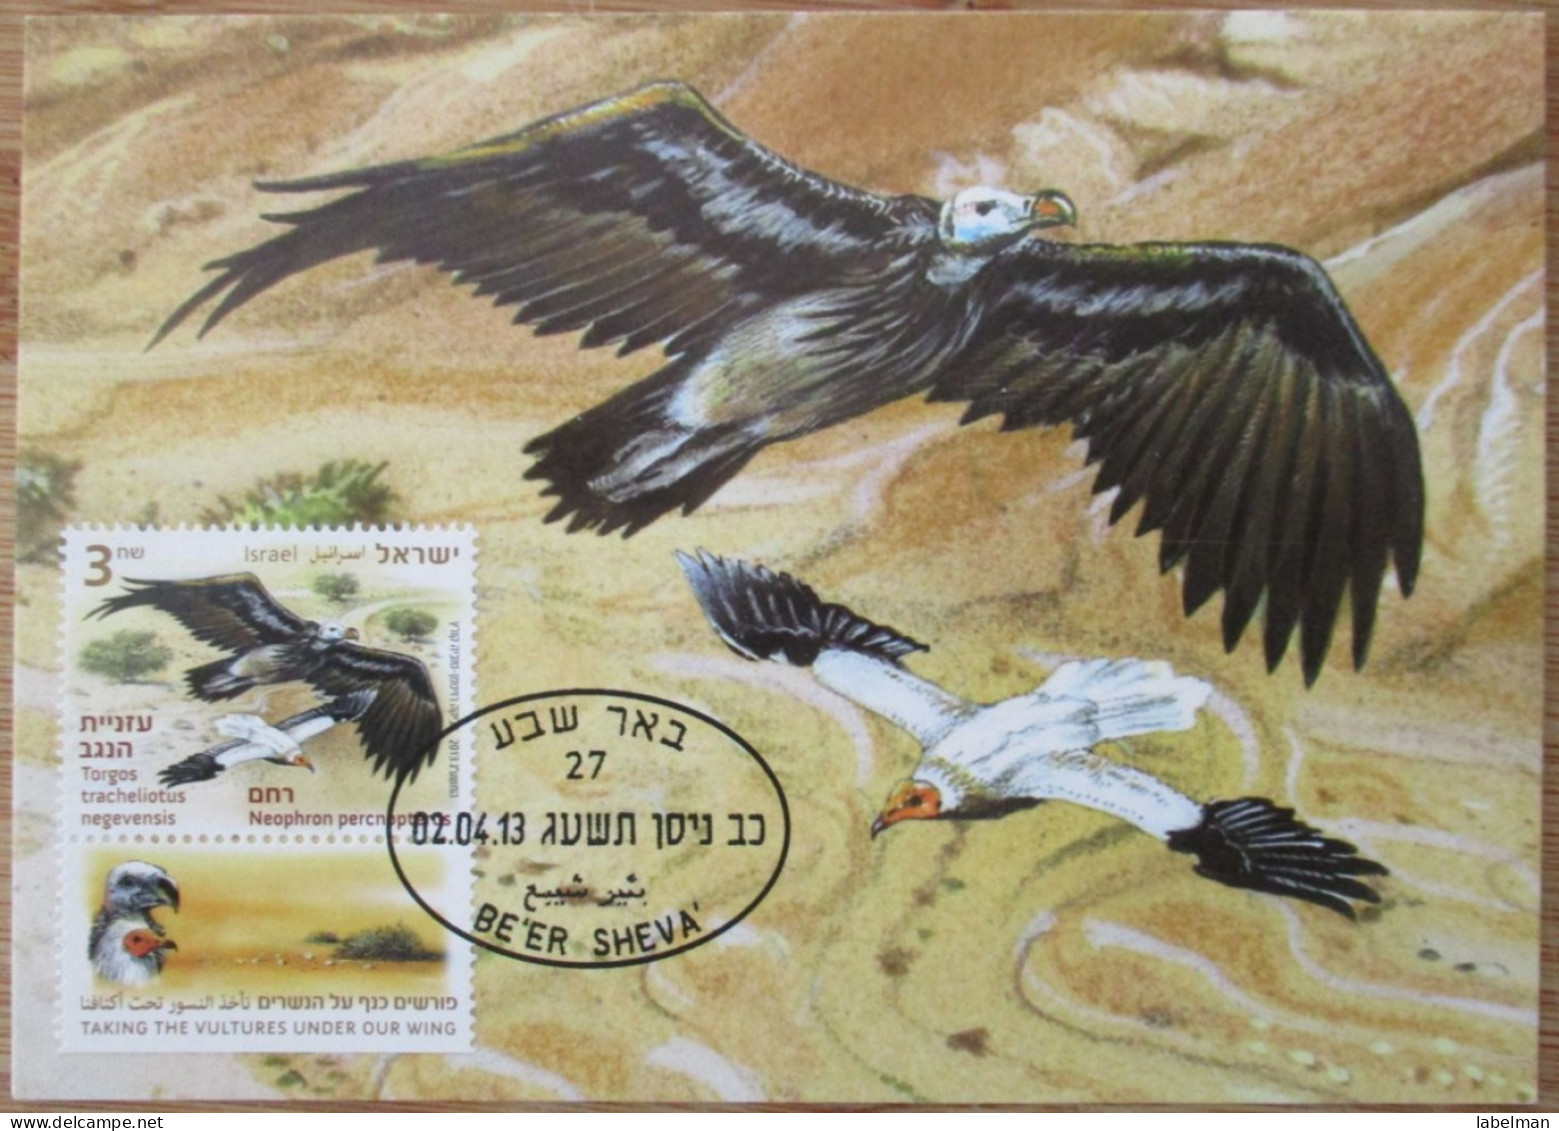 ISRAEL 2013 VULTURE GYPAETUS BARBATUS PALPHOT MAXIMUM CARD STAMP FIRST DAY OF ISSUE POSTCARD CARTE POSTALE POSTKARTE - Cartoline Maximum